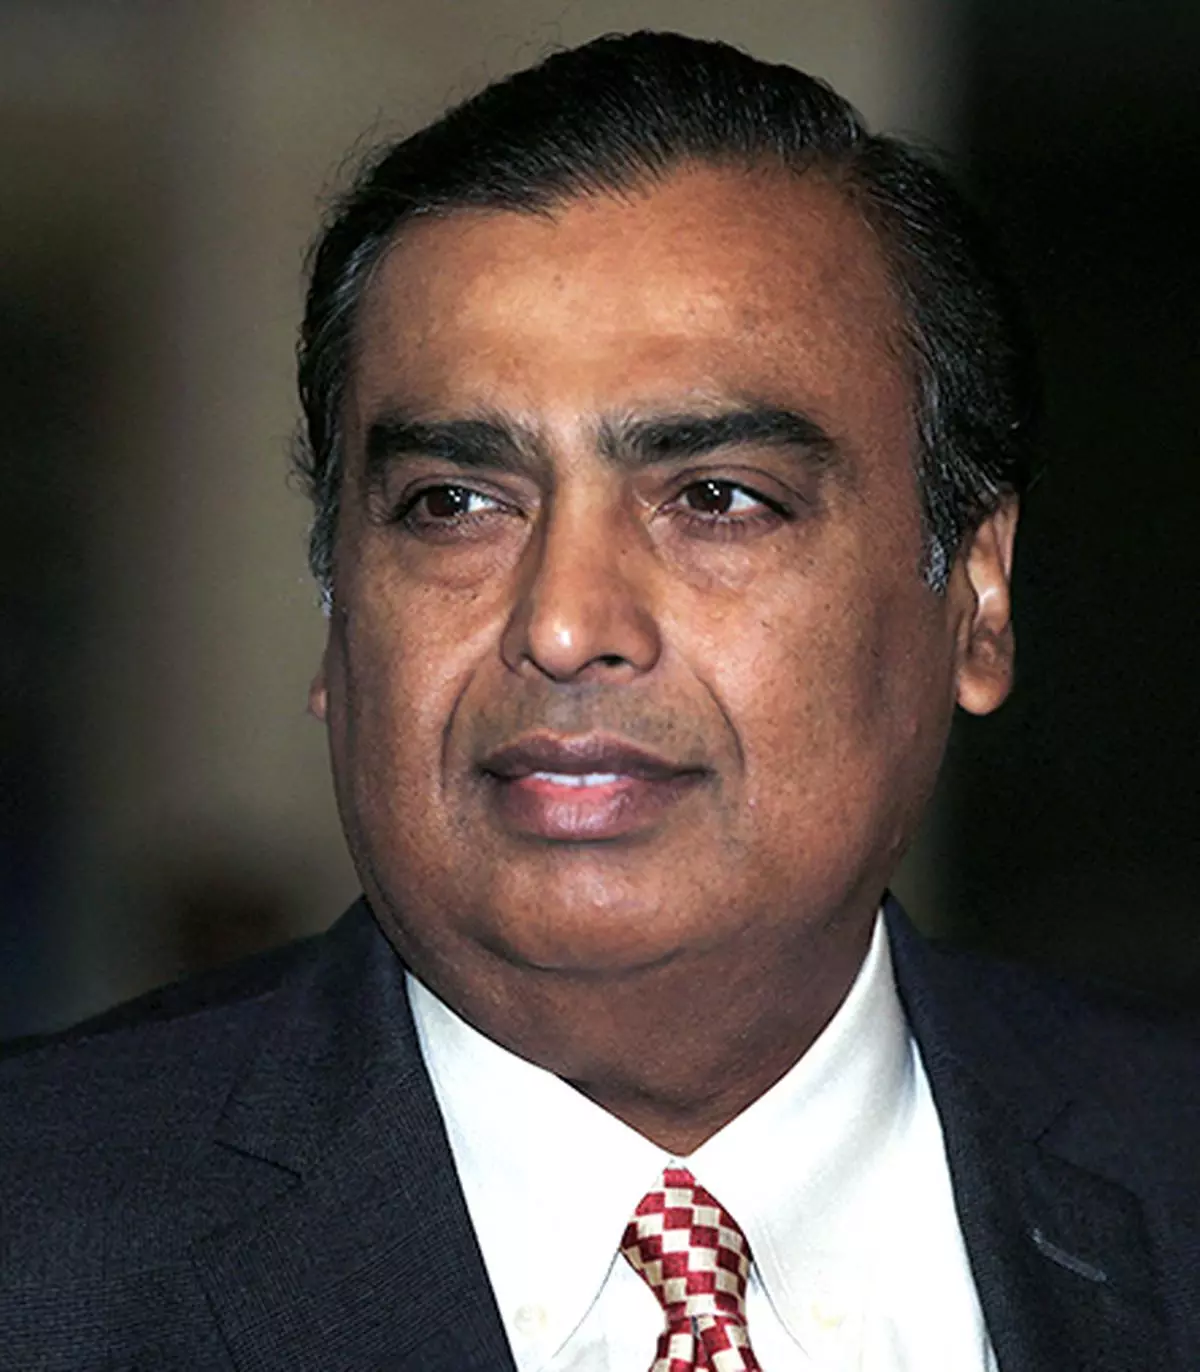 FILE PHOTO: Mukesh Ambani, Chairman and Managing Director of Reliance Industries